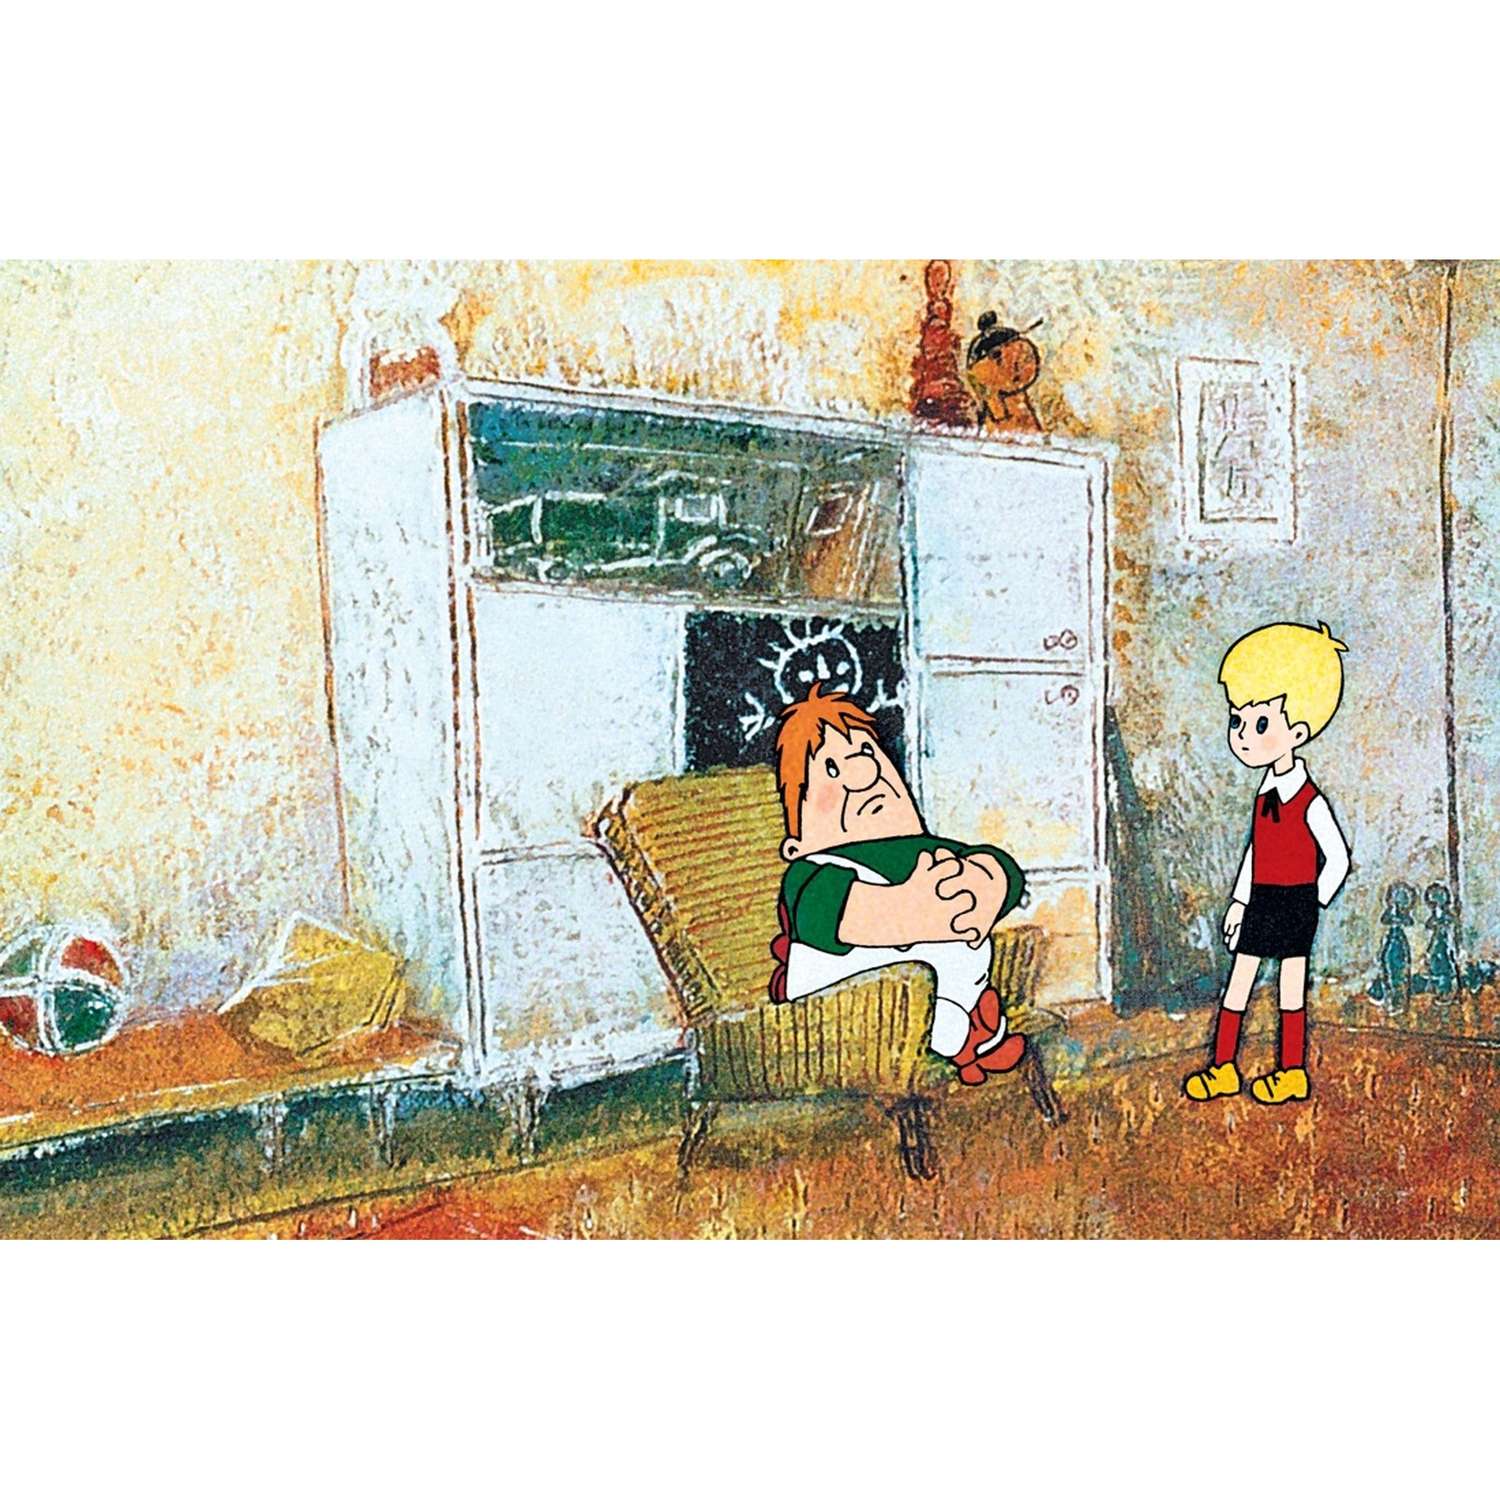 Книга Малыш и Карлсон который живёт на крыше Линдгрен иллюстрации Савченко - фото 10